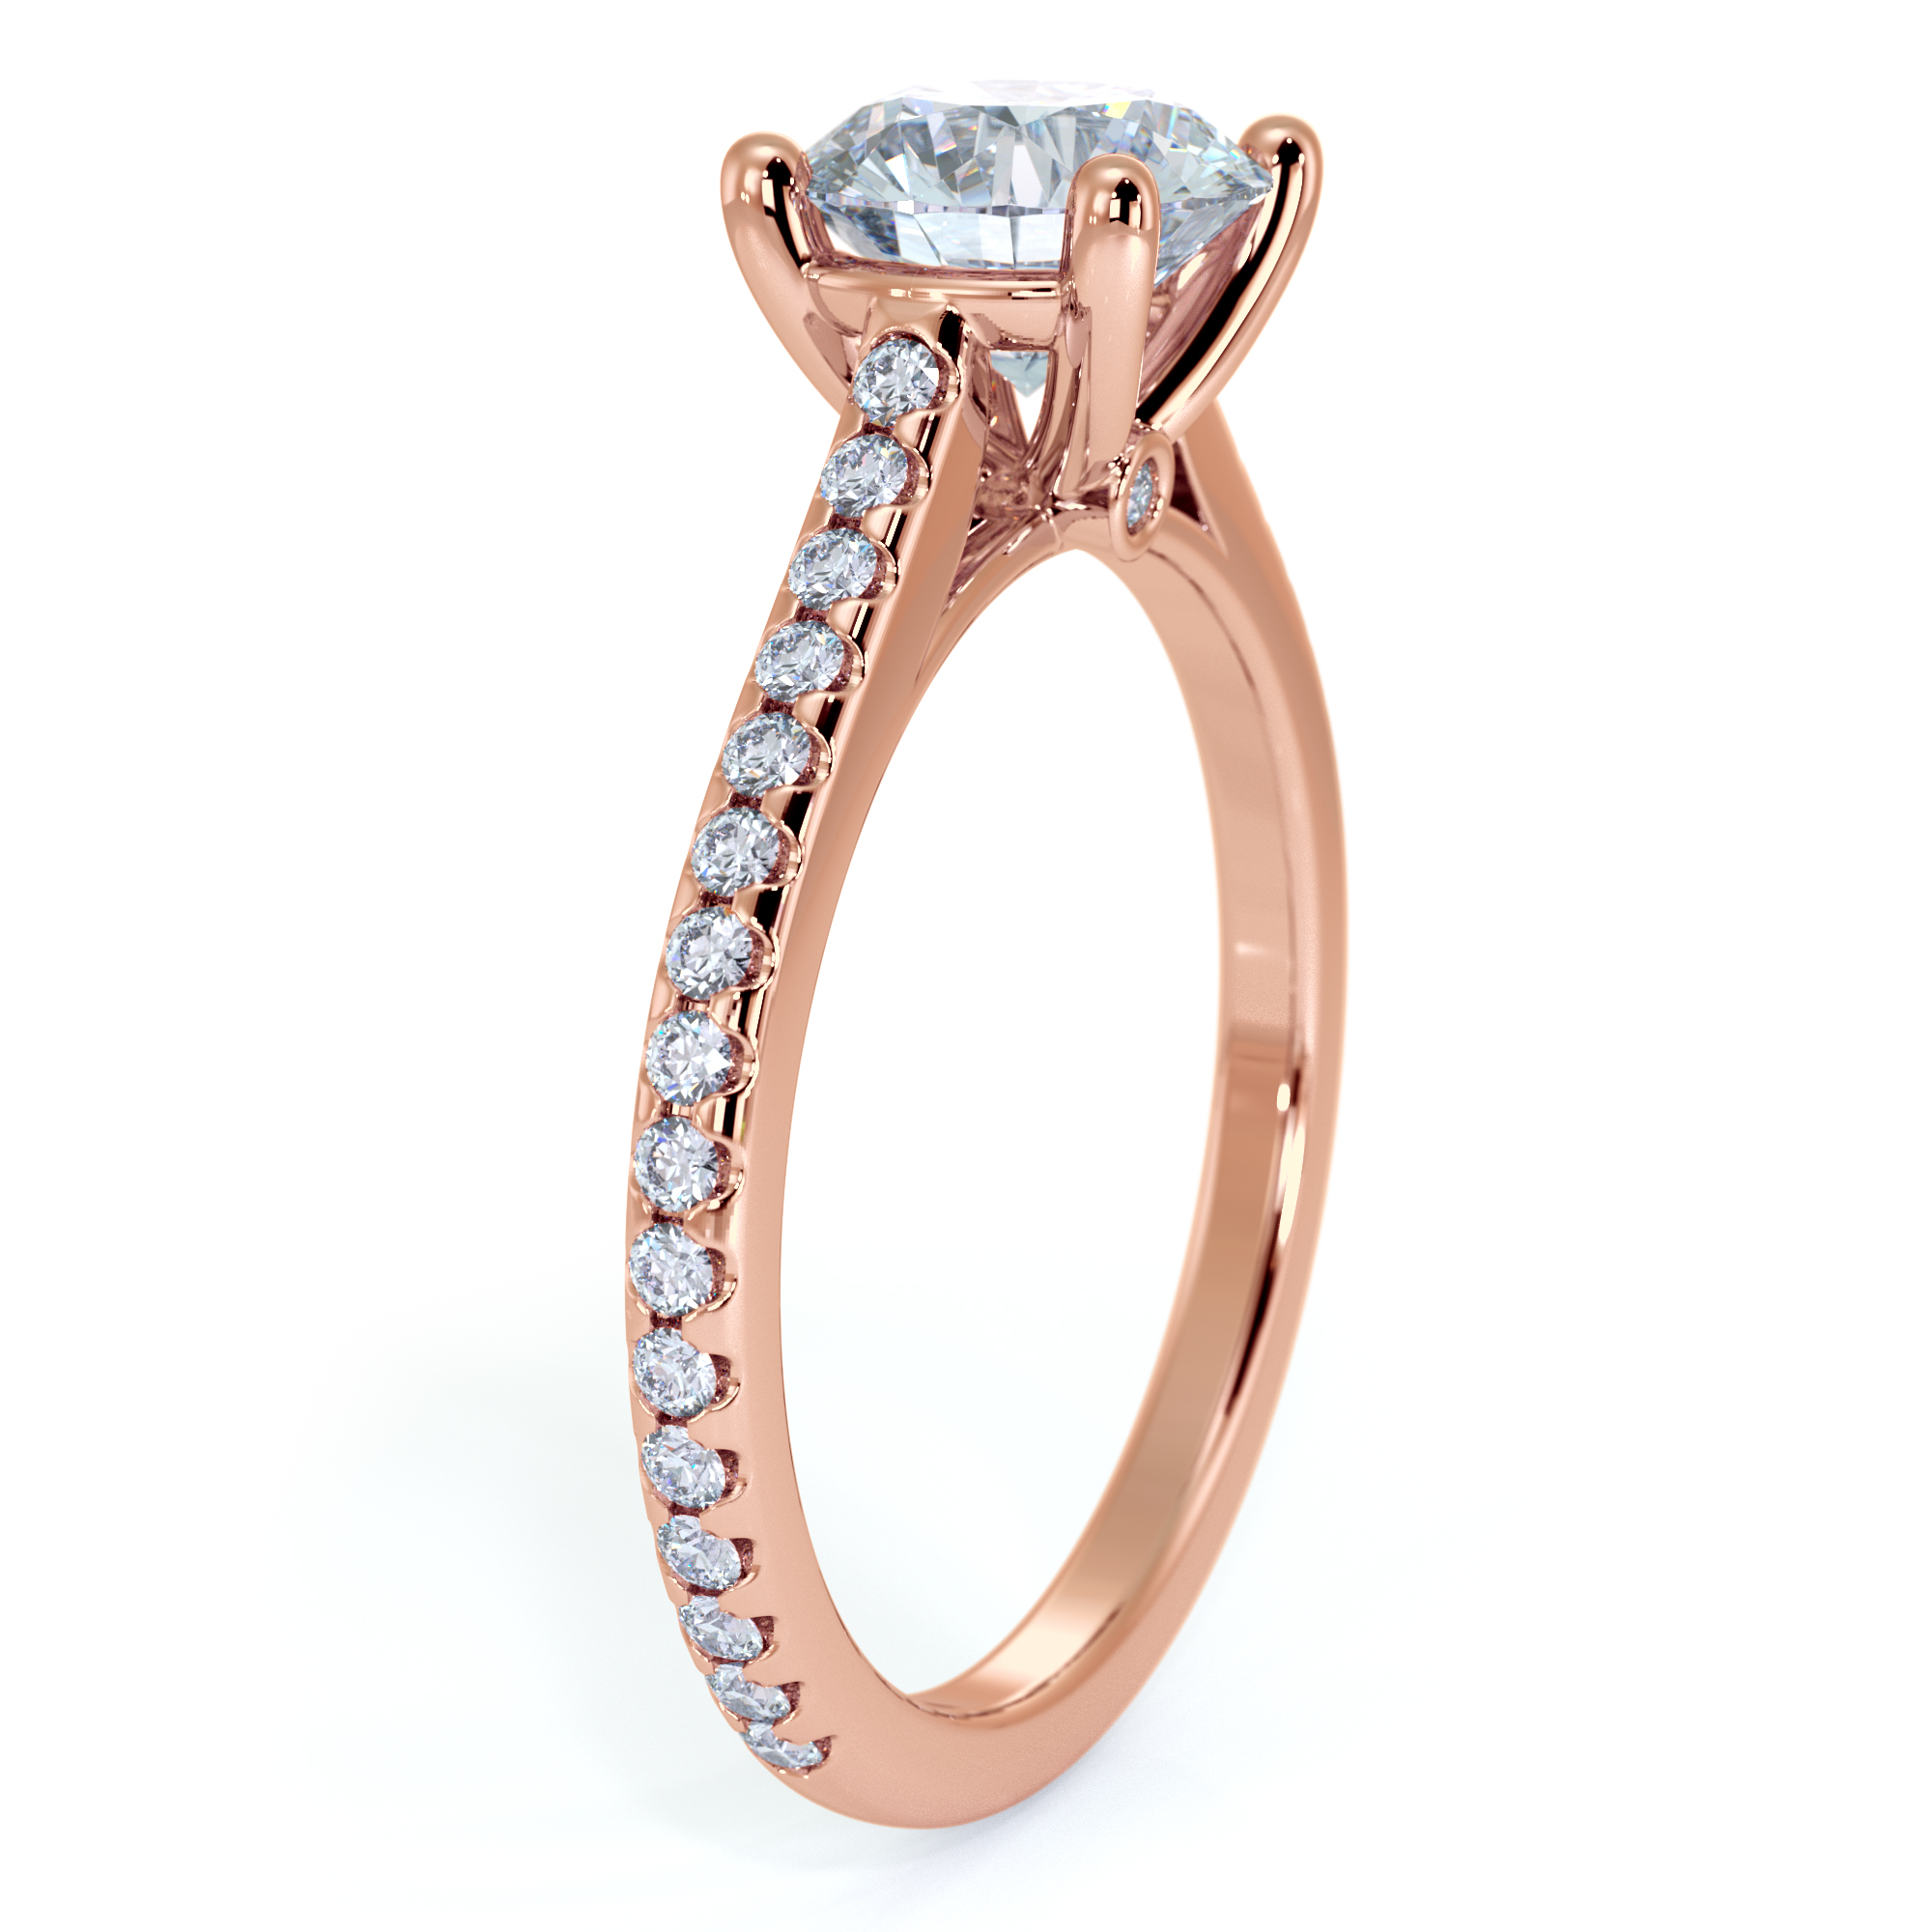 Bella, A Striking Pavé Diamond Engagement Ring Setting